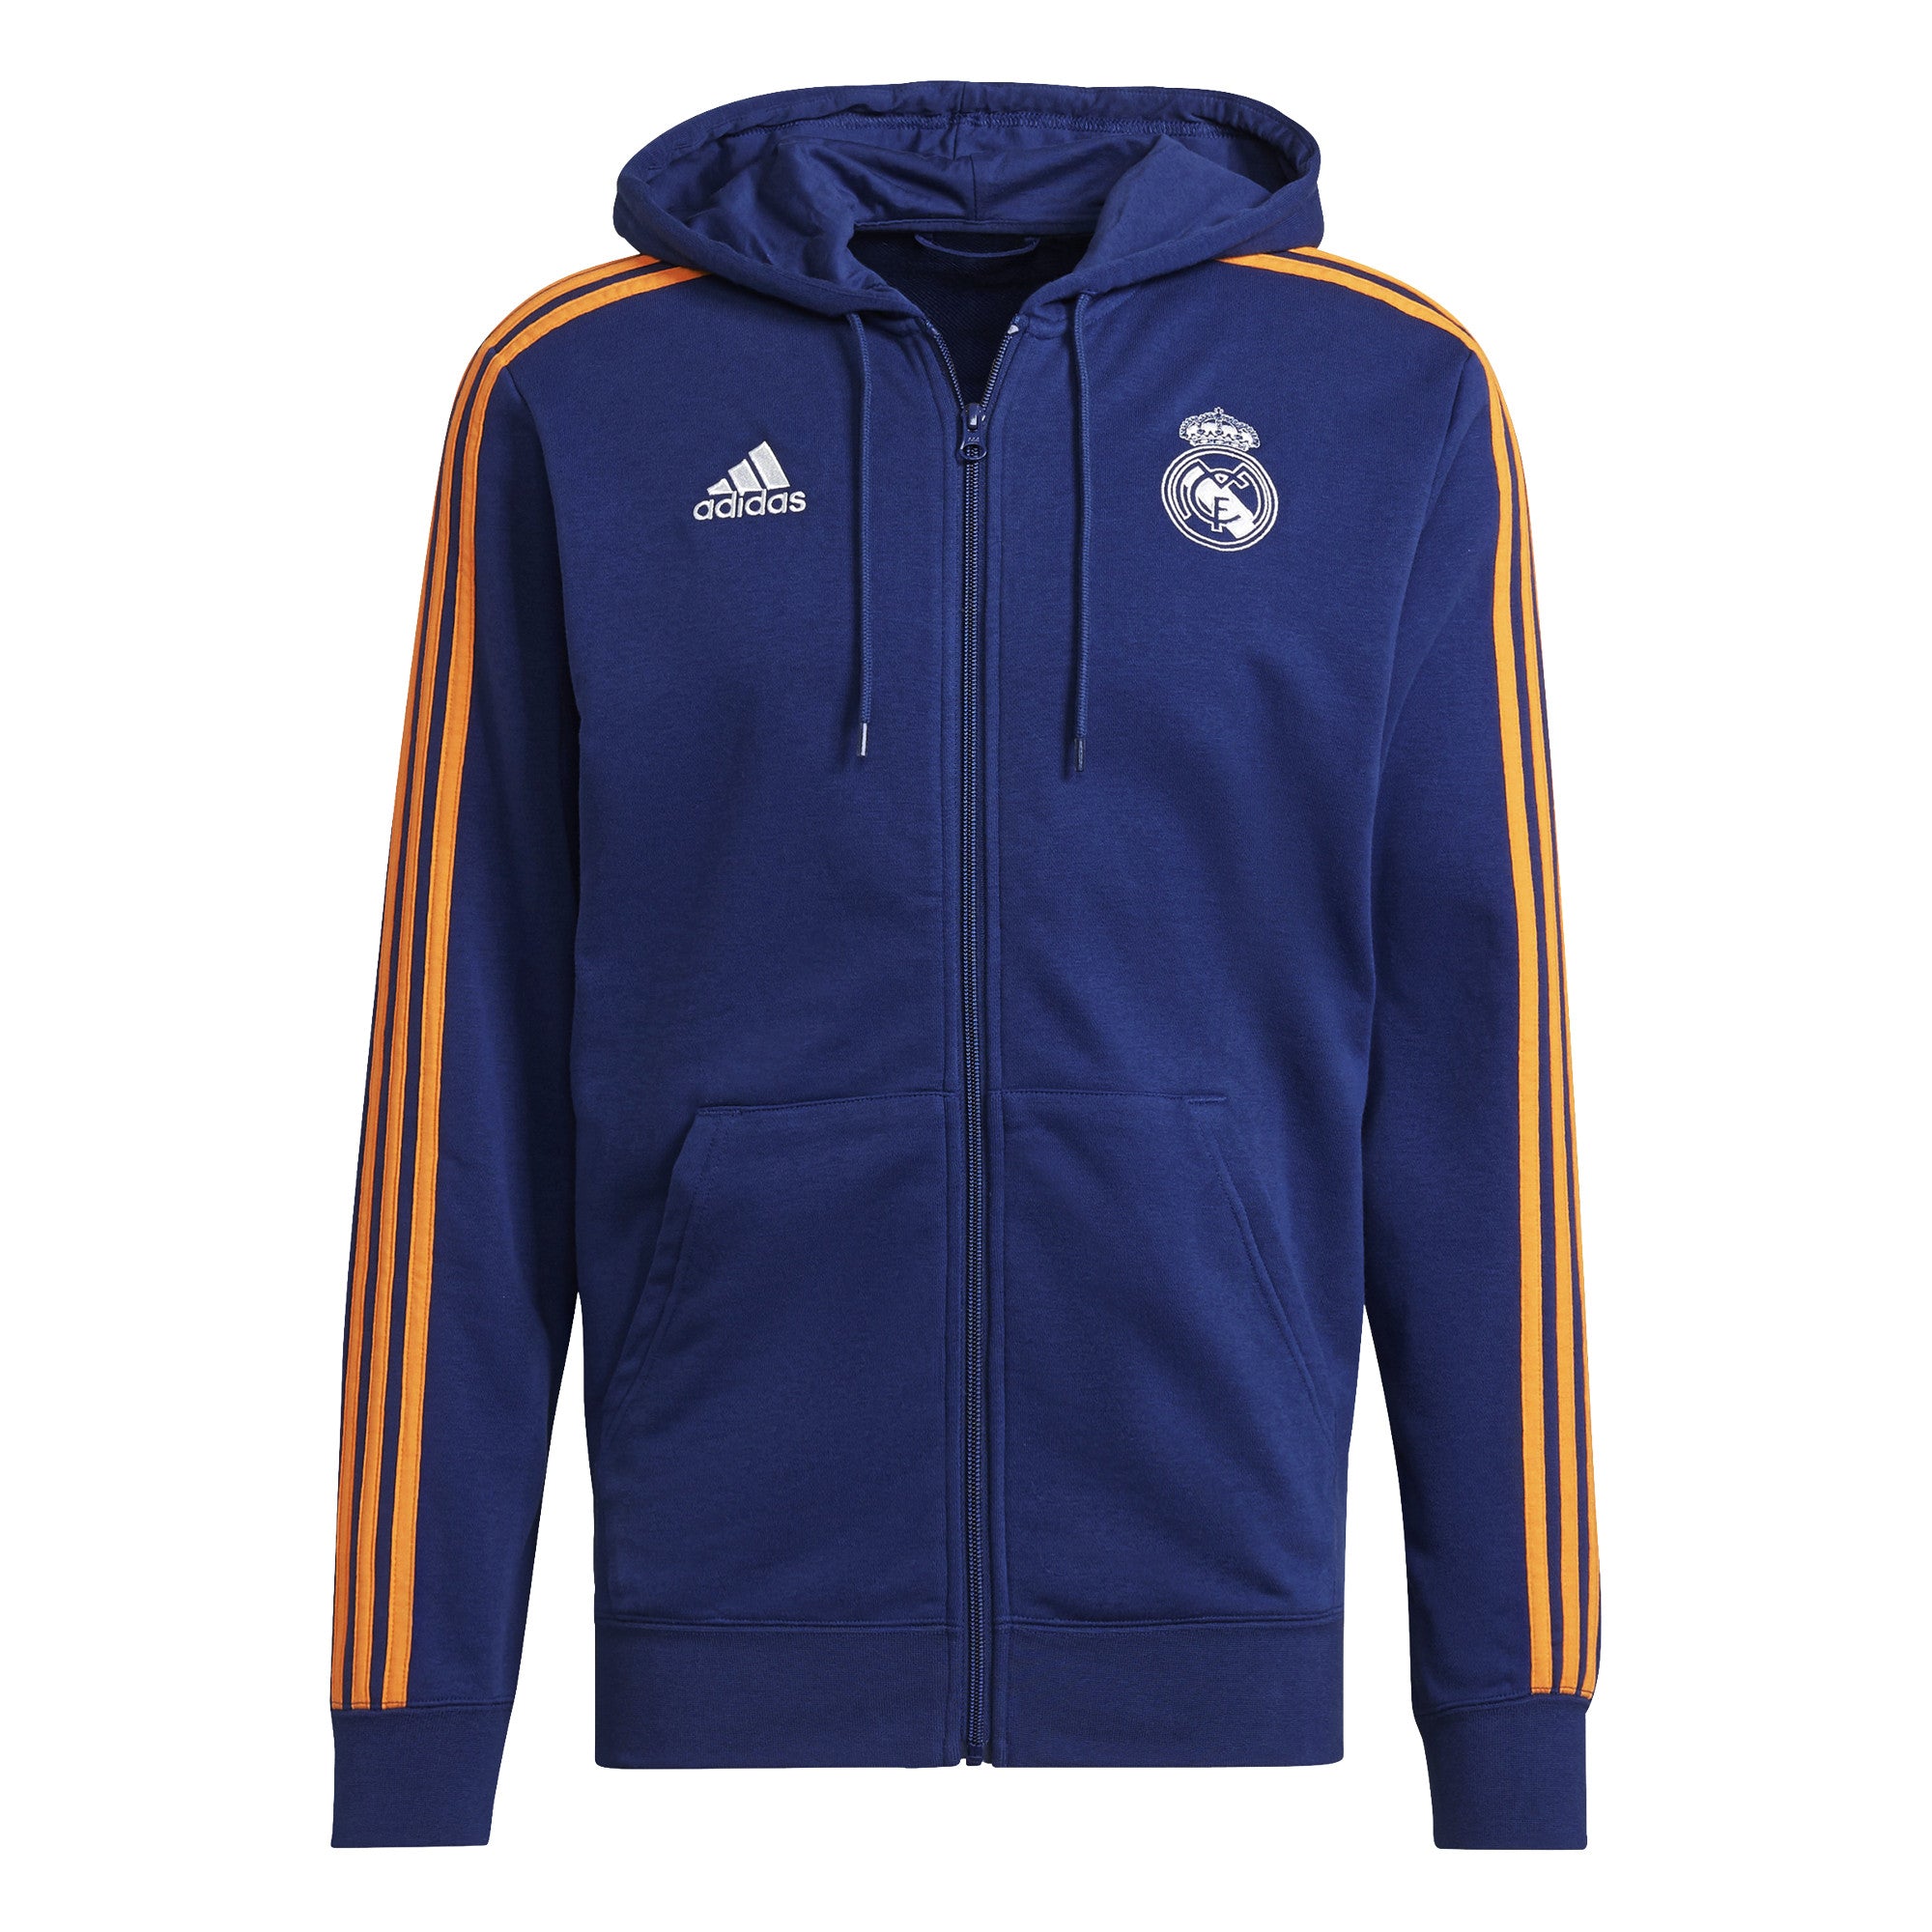 Adidas Men's Real Madrid 3 Stripes Track Jacket- BLUE/ORANGE